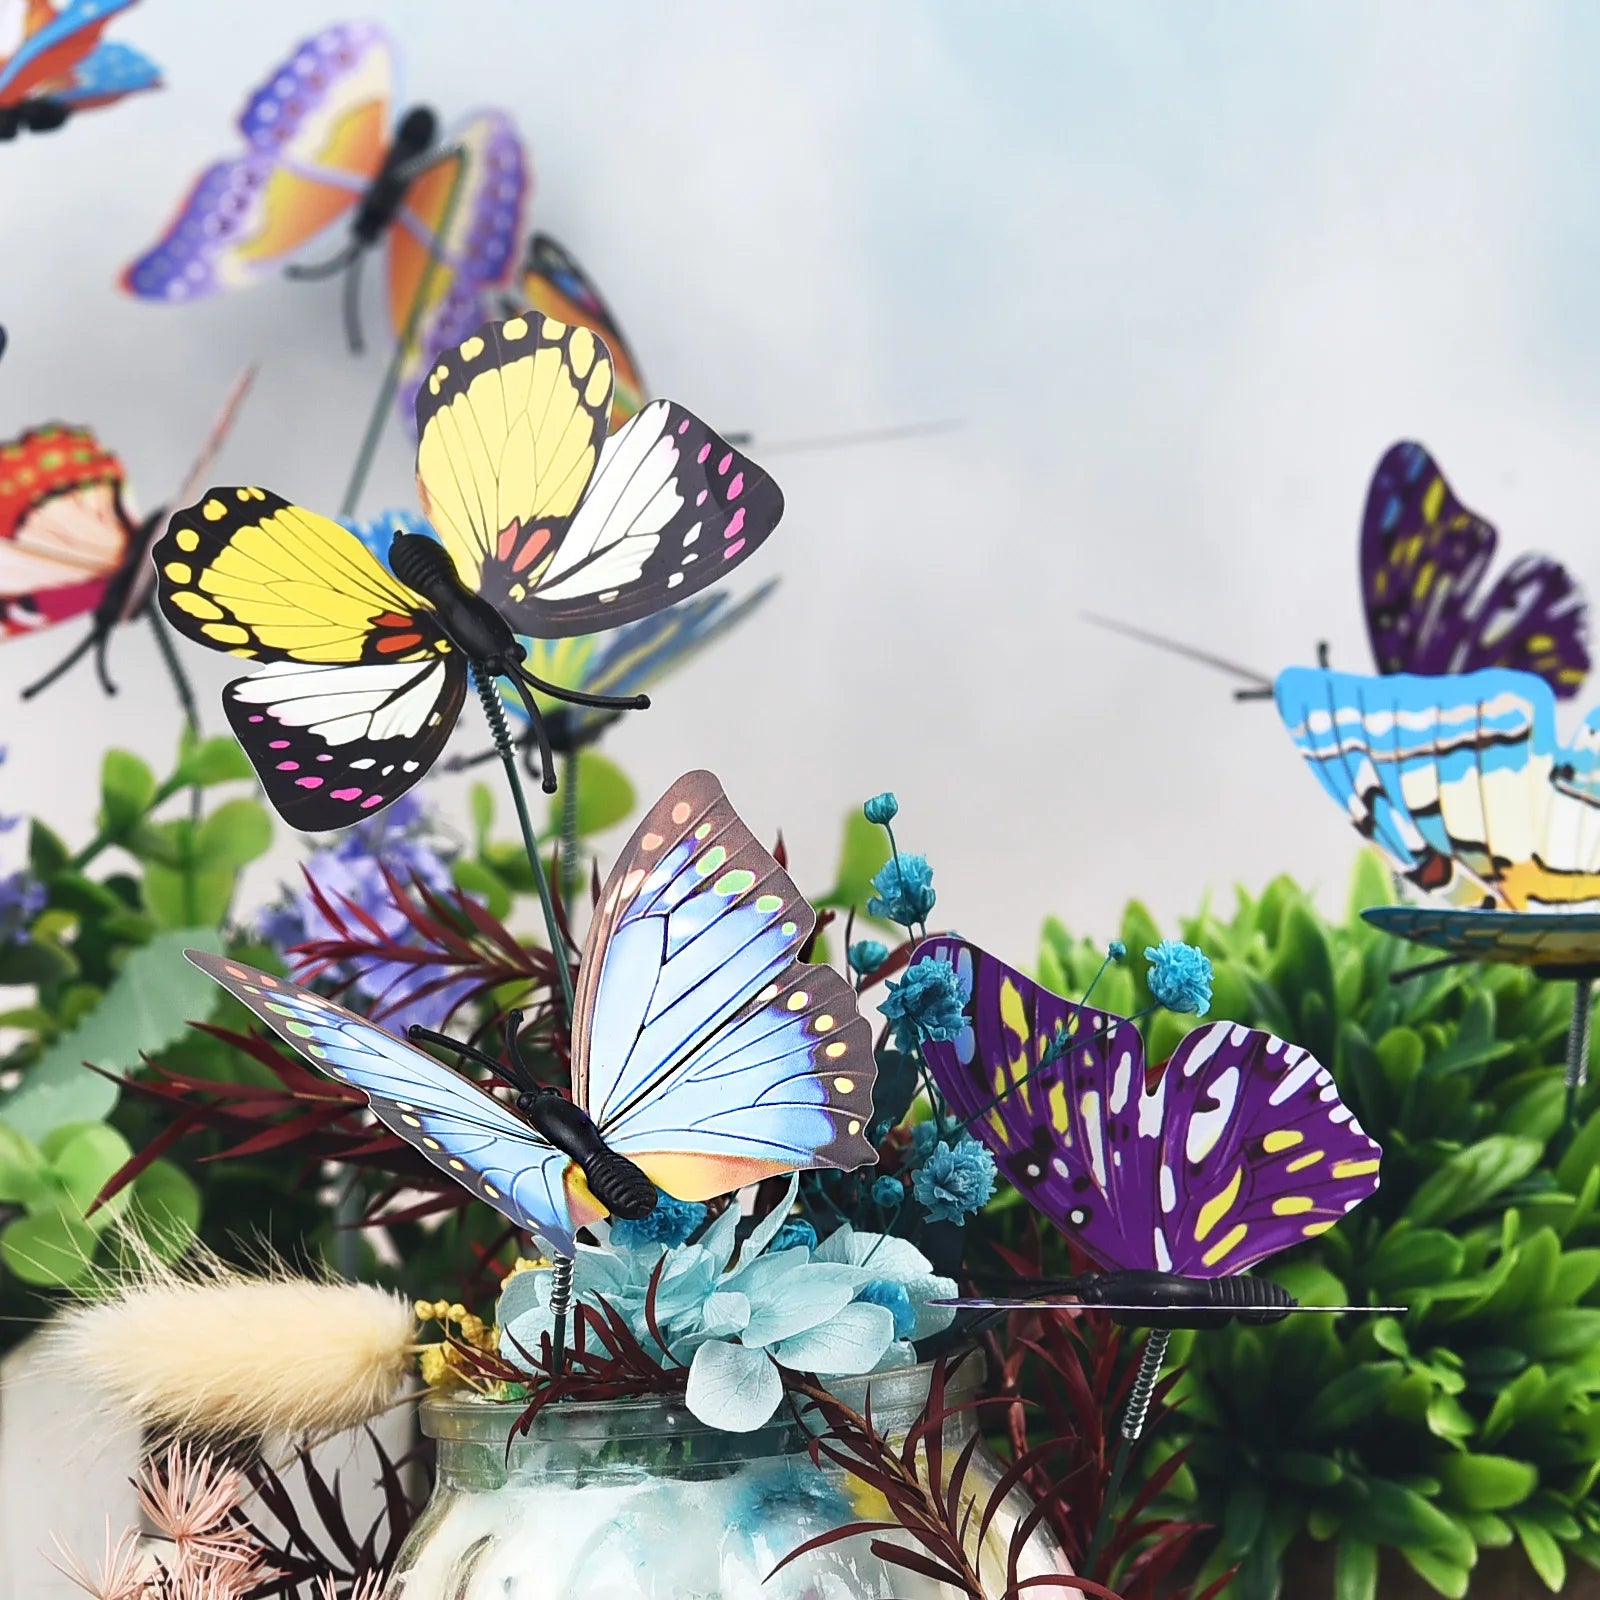 5-24Piece/Set 3D Simulation Butterflies Garden Yard Pot Planters Colorful Butterfly Stakes Decoration Outdoor Flower Pots Decor